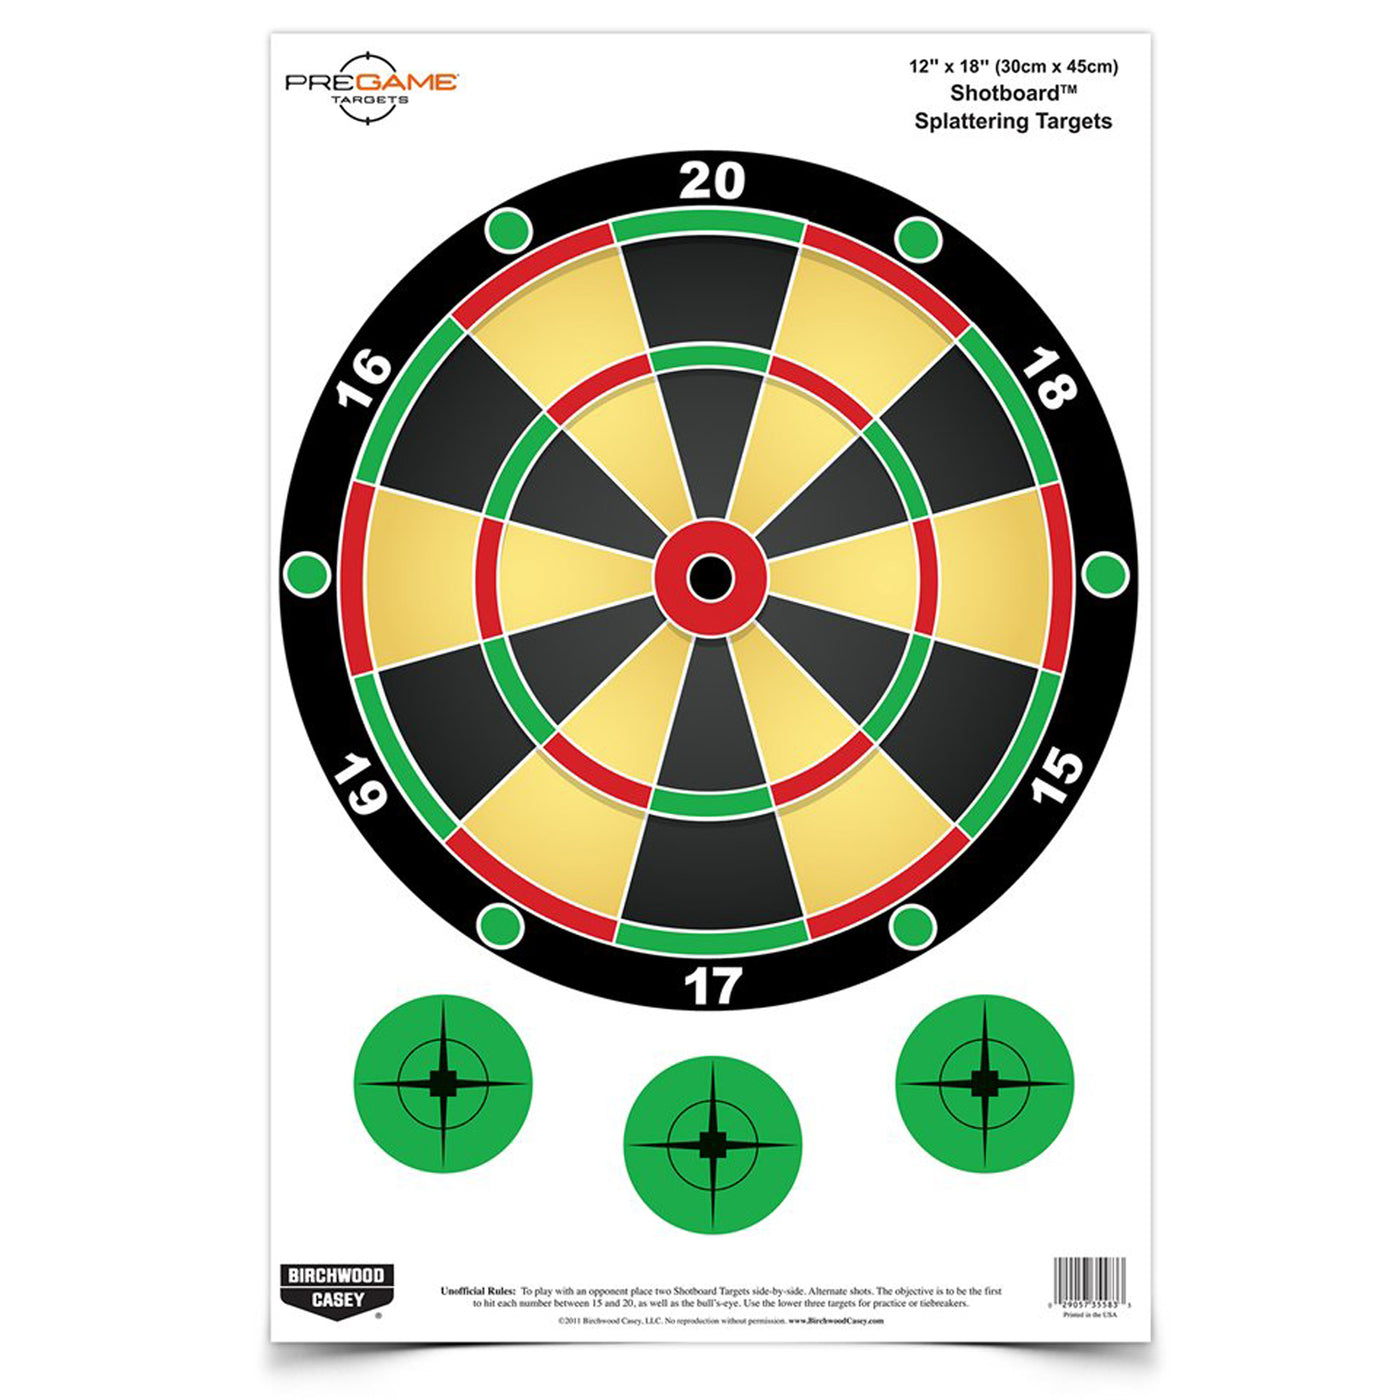 B/c Target Pregame 12"x18" - Shotboard 8 Targets